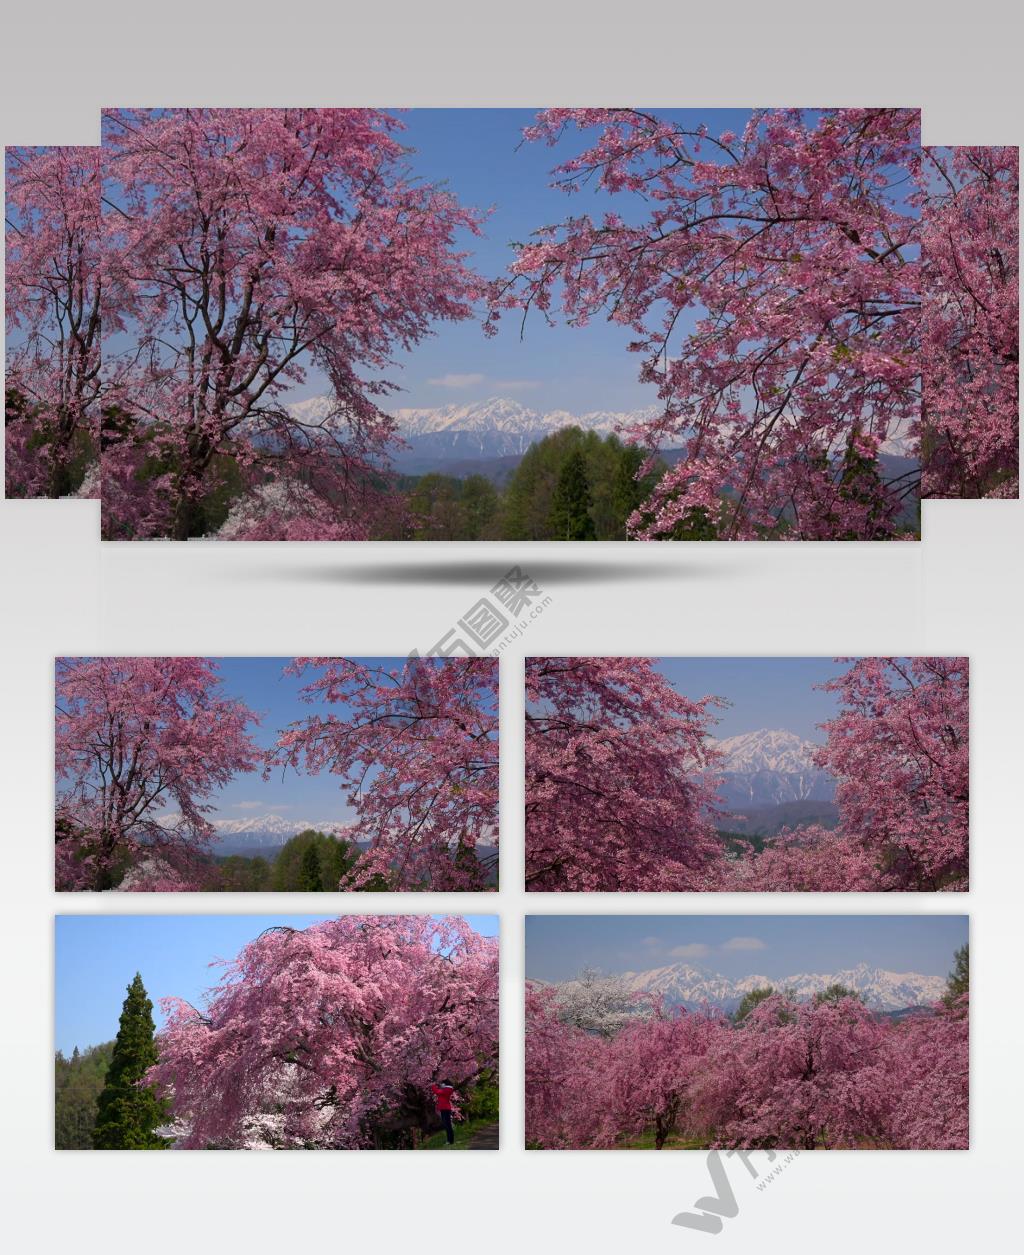 ［4K］ 盛开的樱花 4K片源 超高清实拍视频素材 自然风景山水花草树木瀑布超清素材